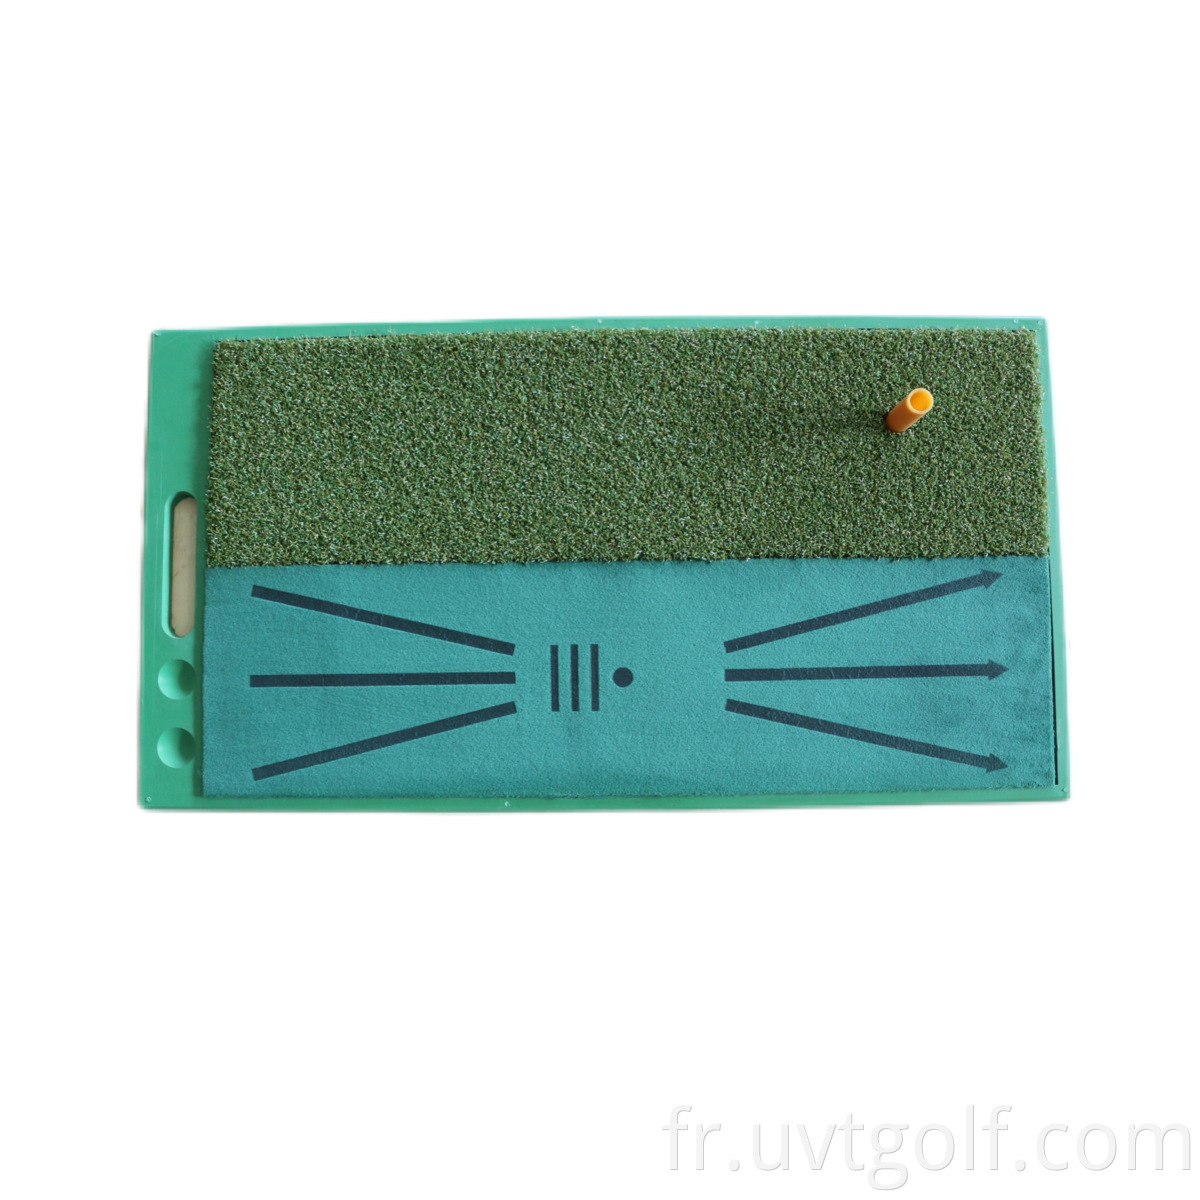 Golf Swing detection mat